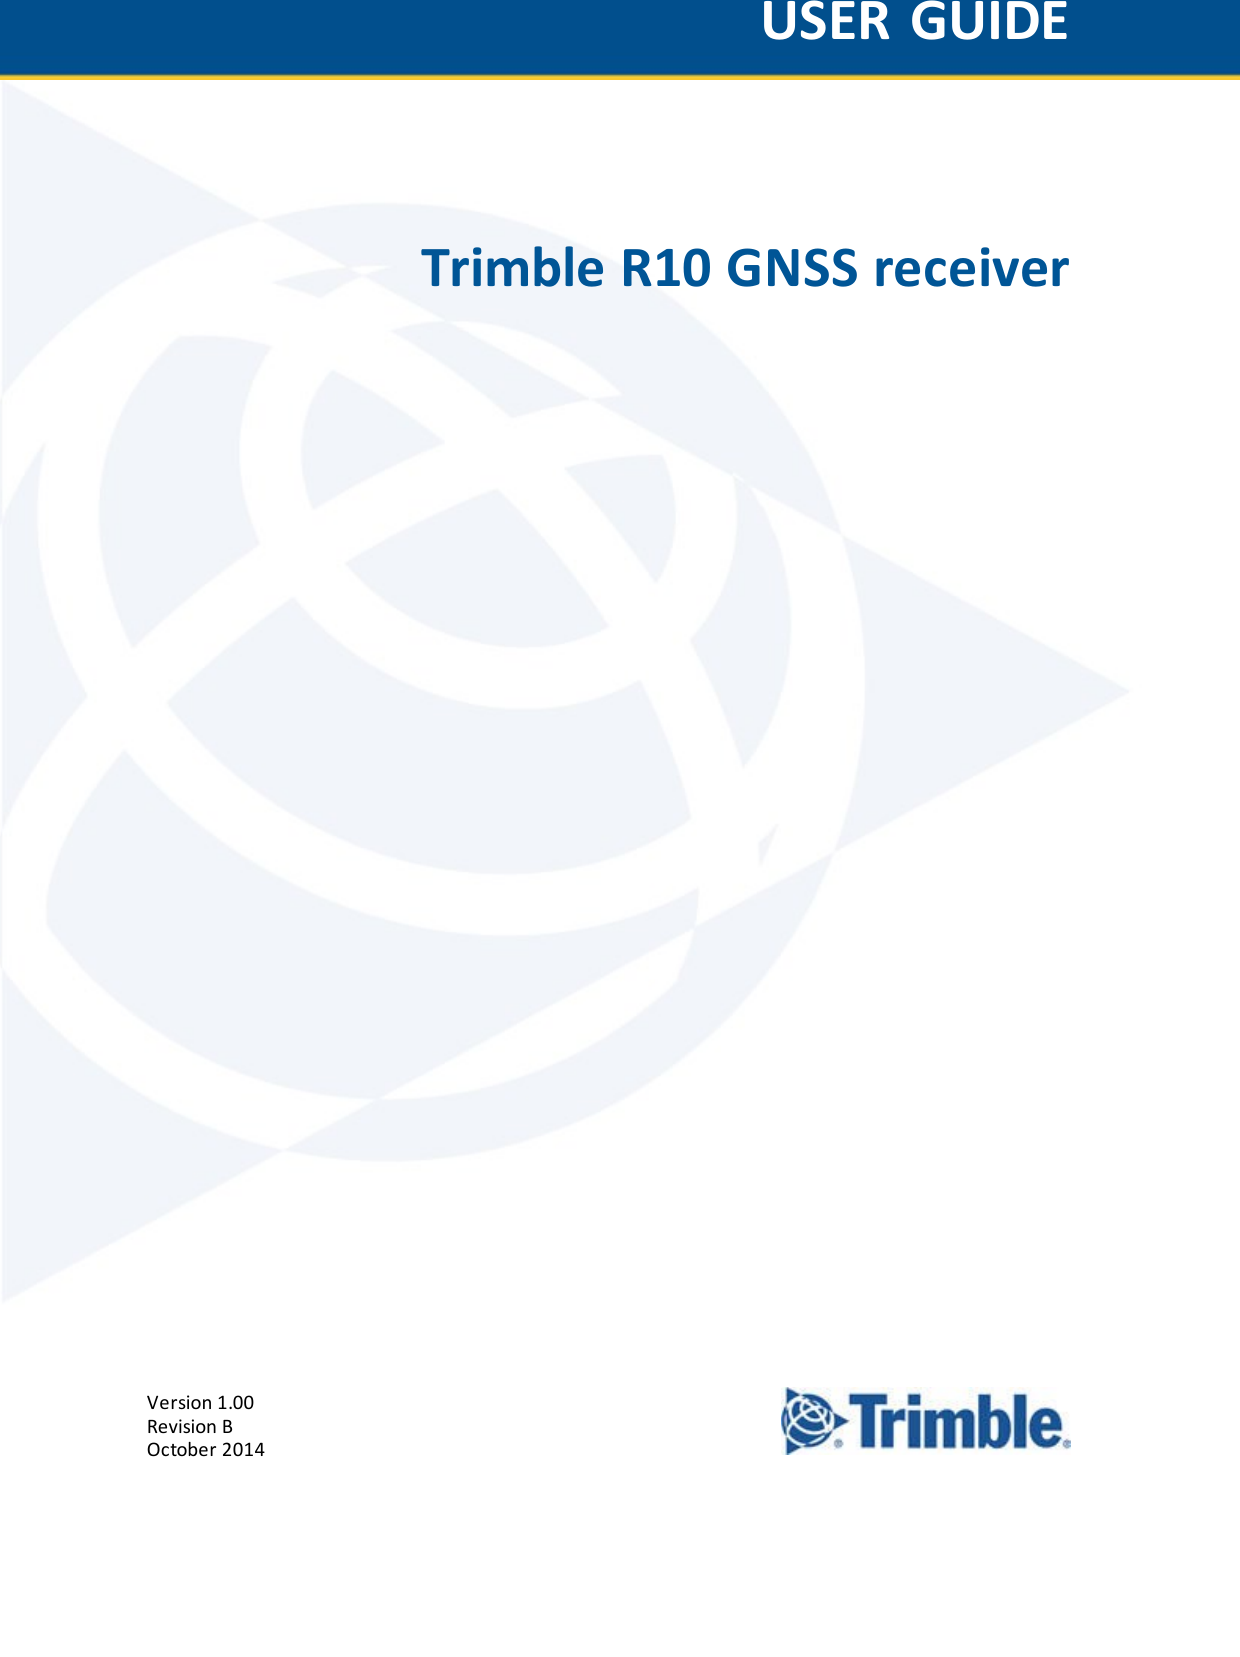 Version 1.00Revision BOctober 2014USER GUIDETrimble R10 GNSS receiver1